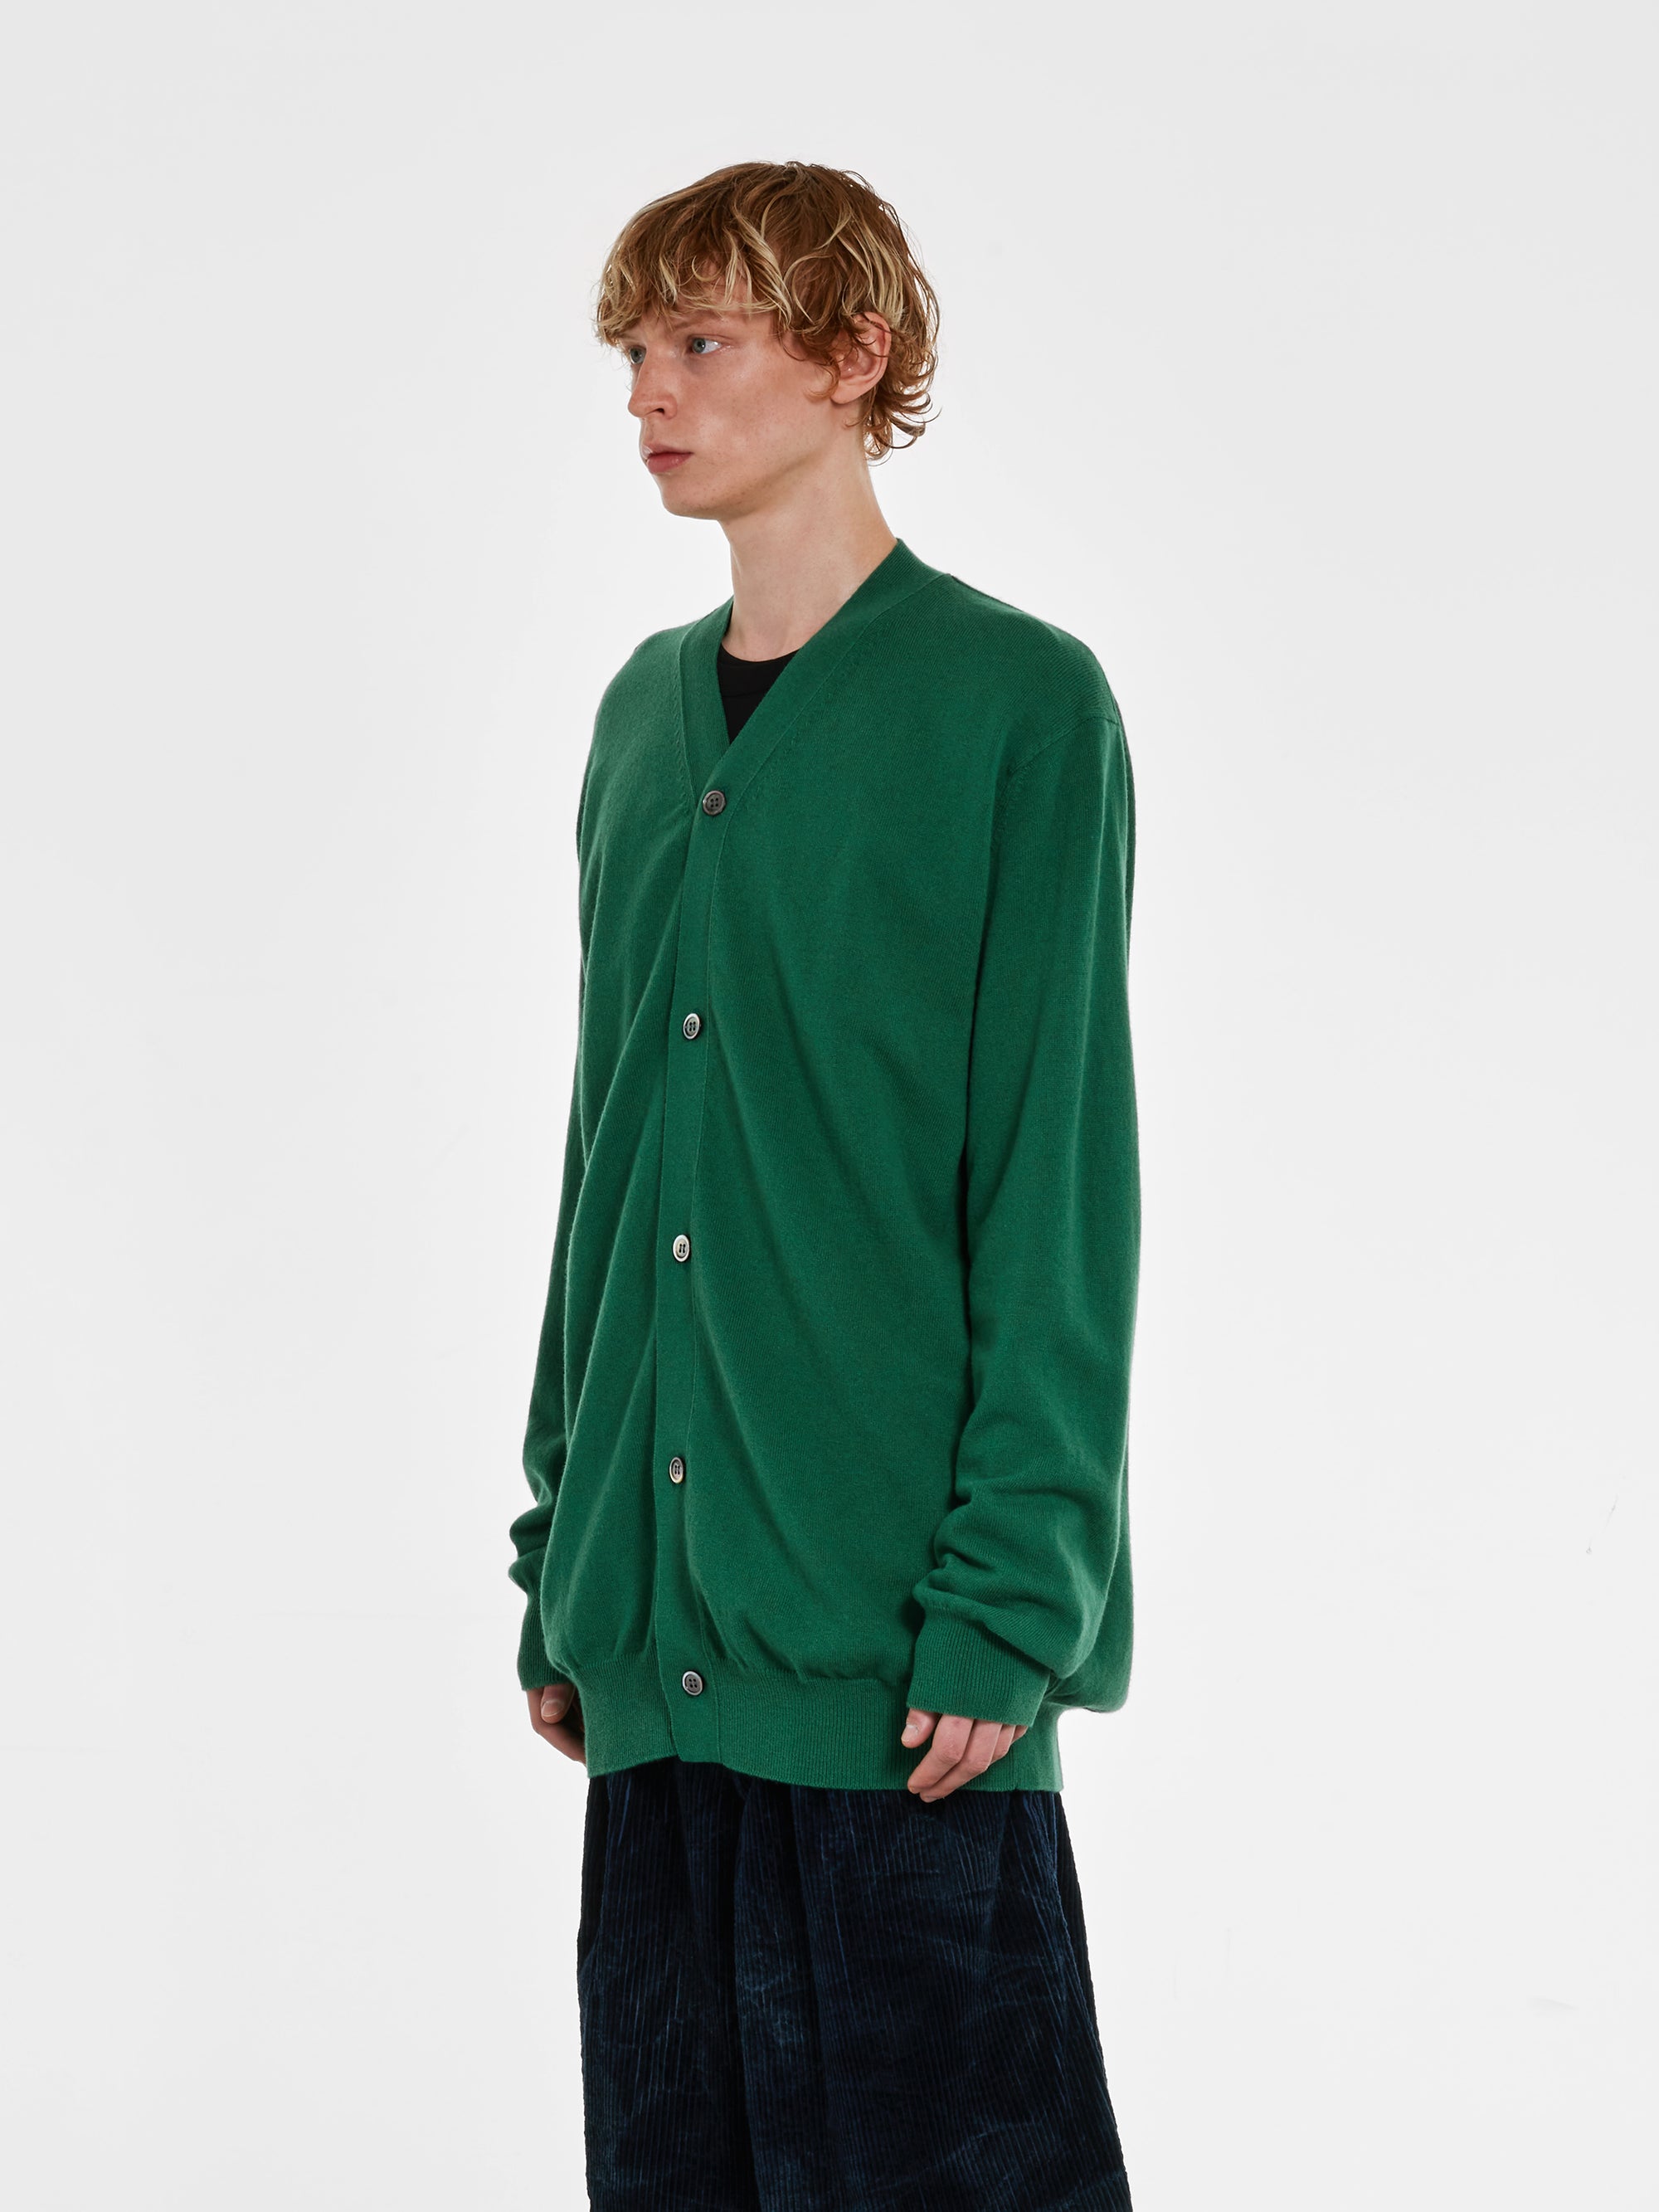 CDG Shirt - Men's Wool Cardigan - (Green) view 2